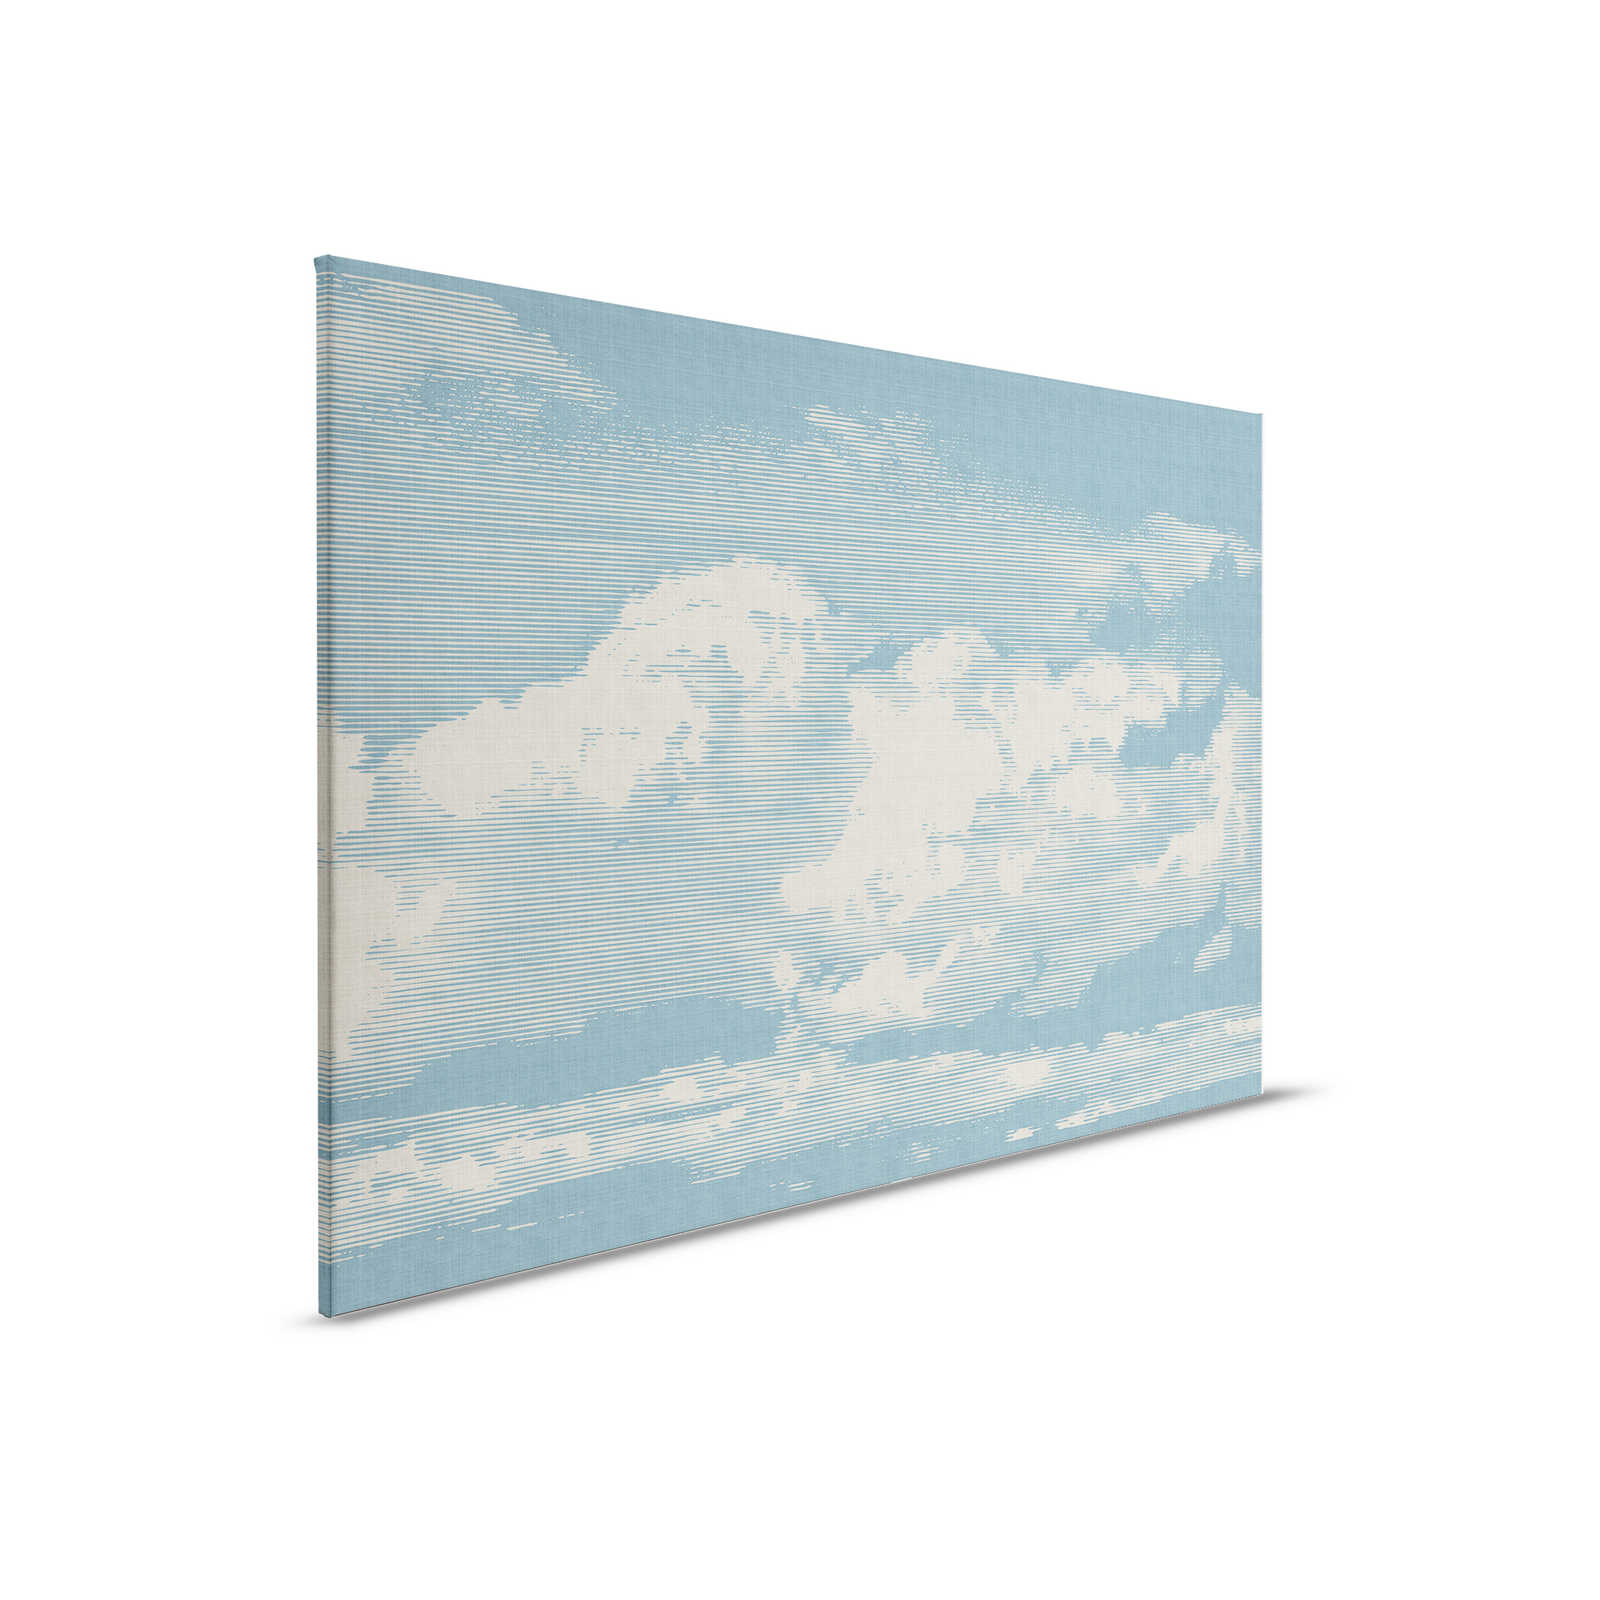 Nubes 1 - Lienzo celestial con motivo de nubes en aspecto de lino natural - 0,90 m x 0,60 m
